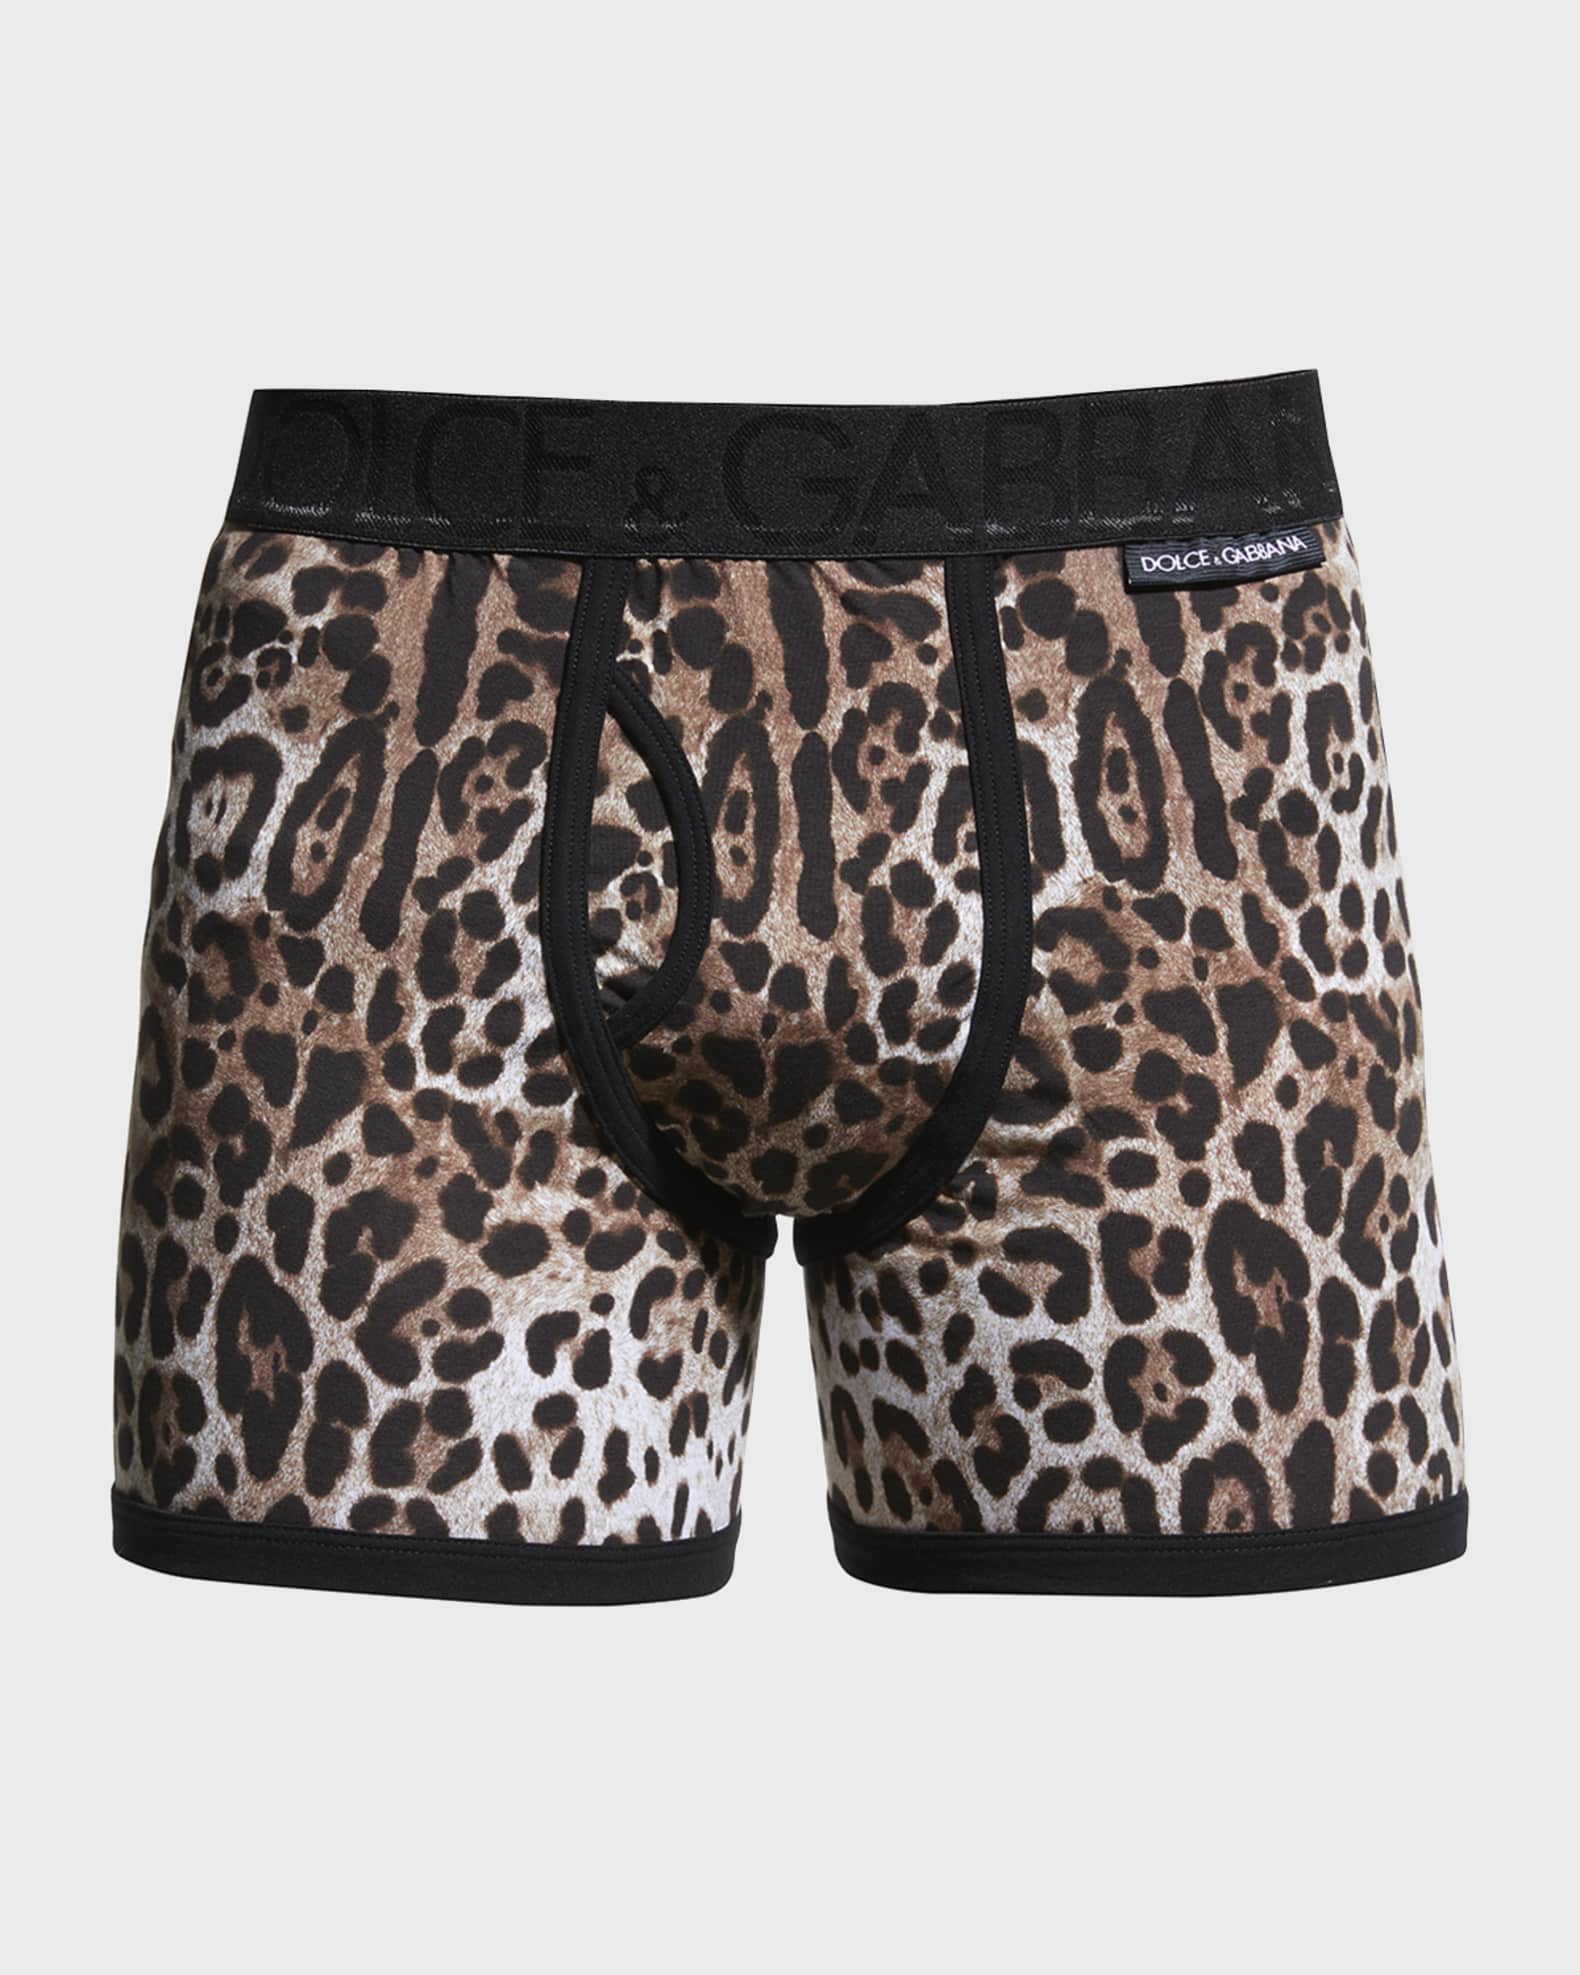 Dolce&Gabbana Men's Leopard Boxer Briefs | Neiman Marcus